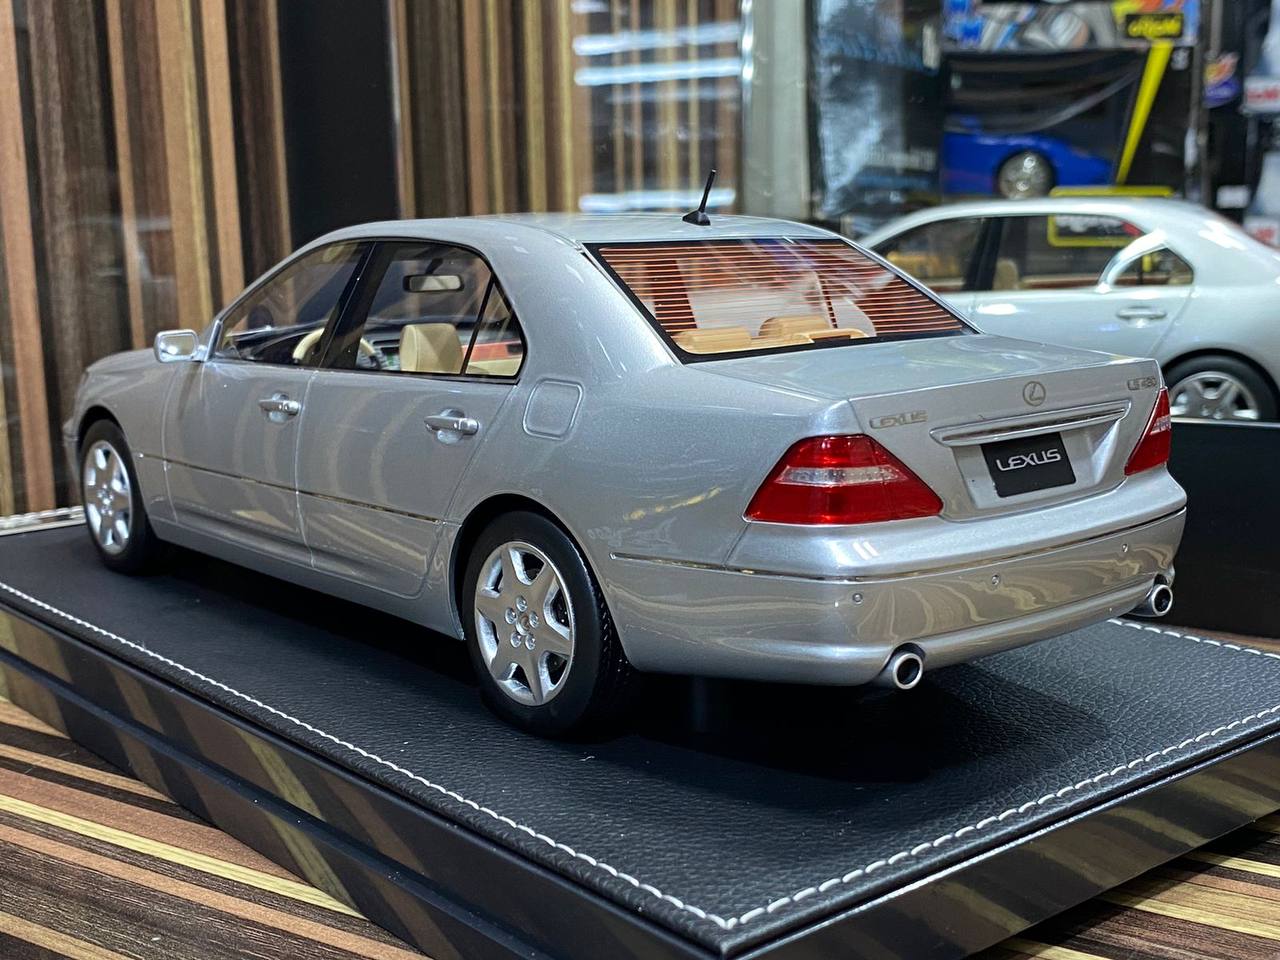 1/18 Diecast Lexus LS430 Silver IVY Models Scale Model Car